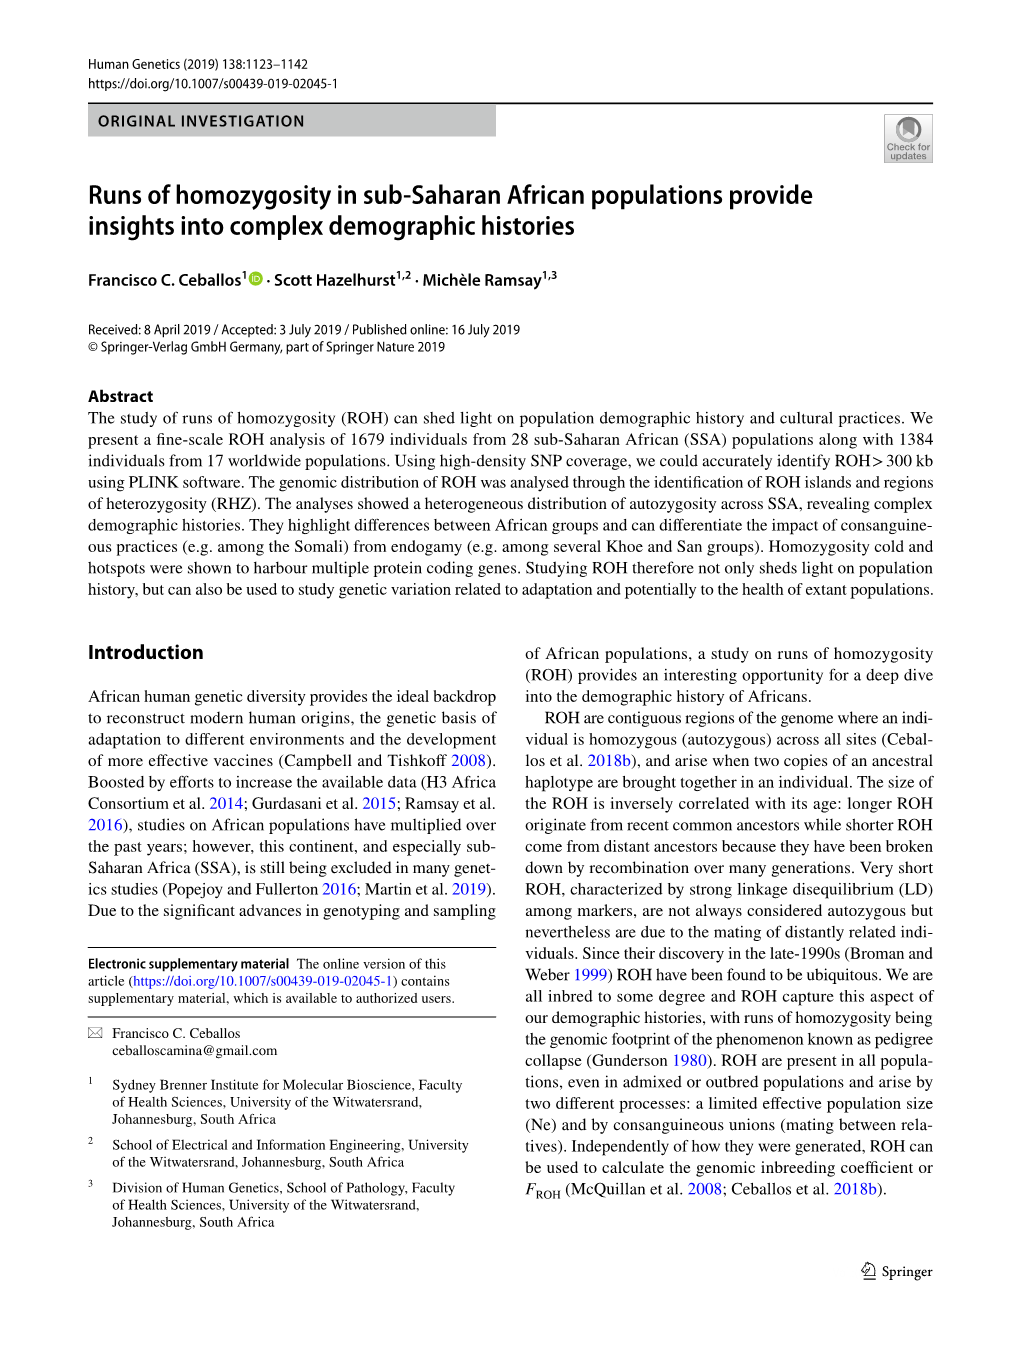 Runs of Homozygosity in Sub-Saharan African Populations